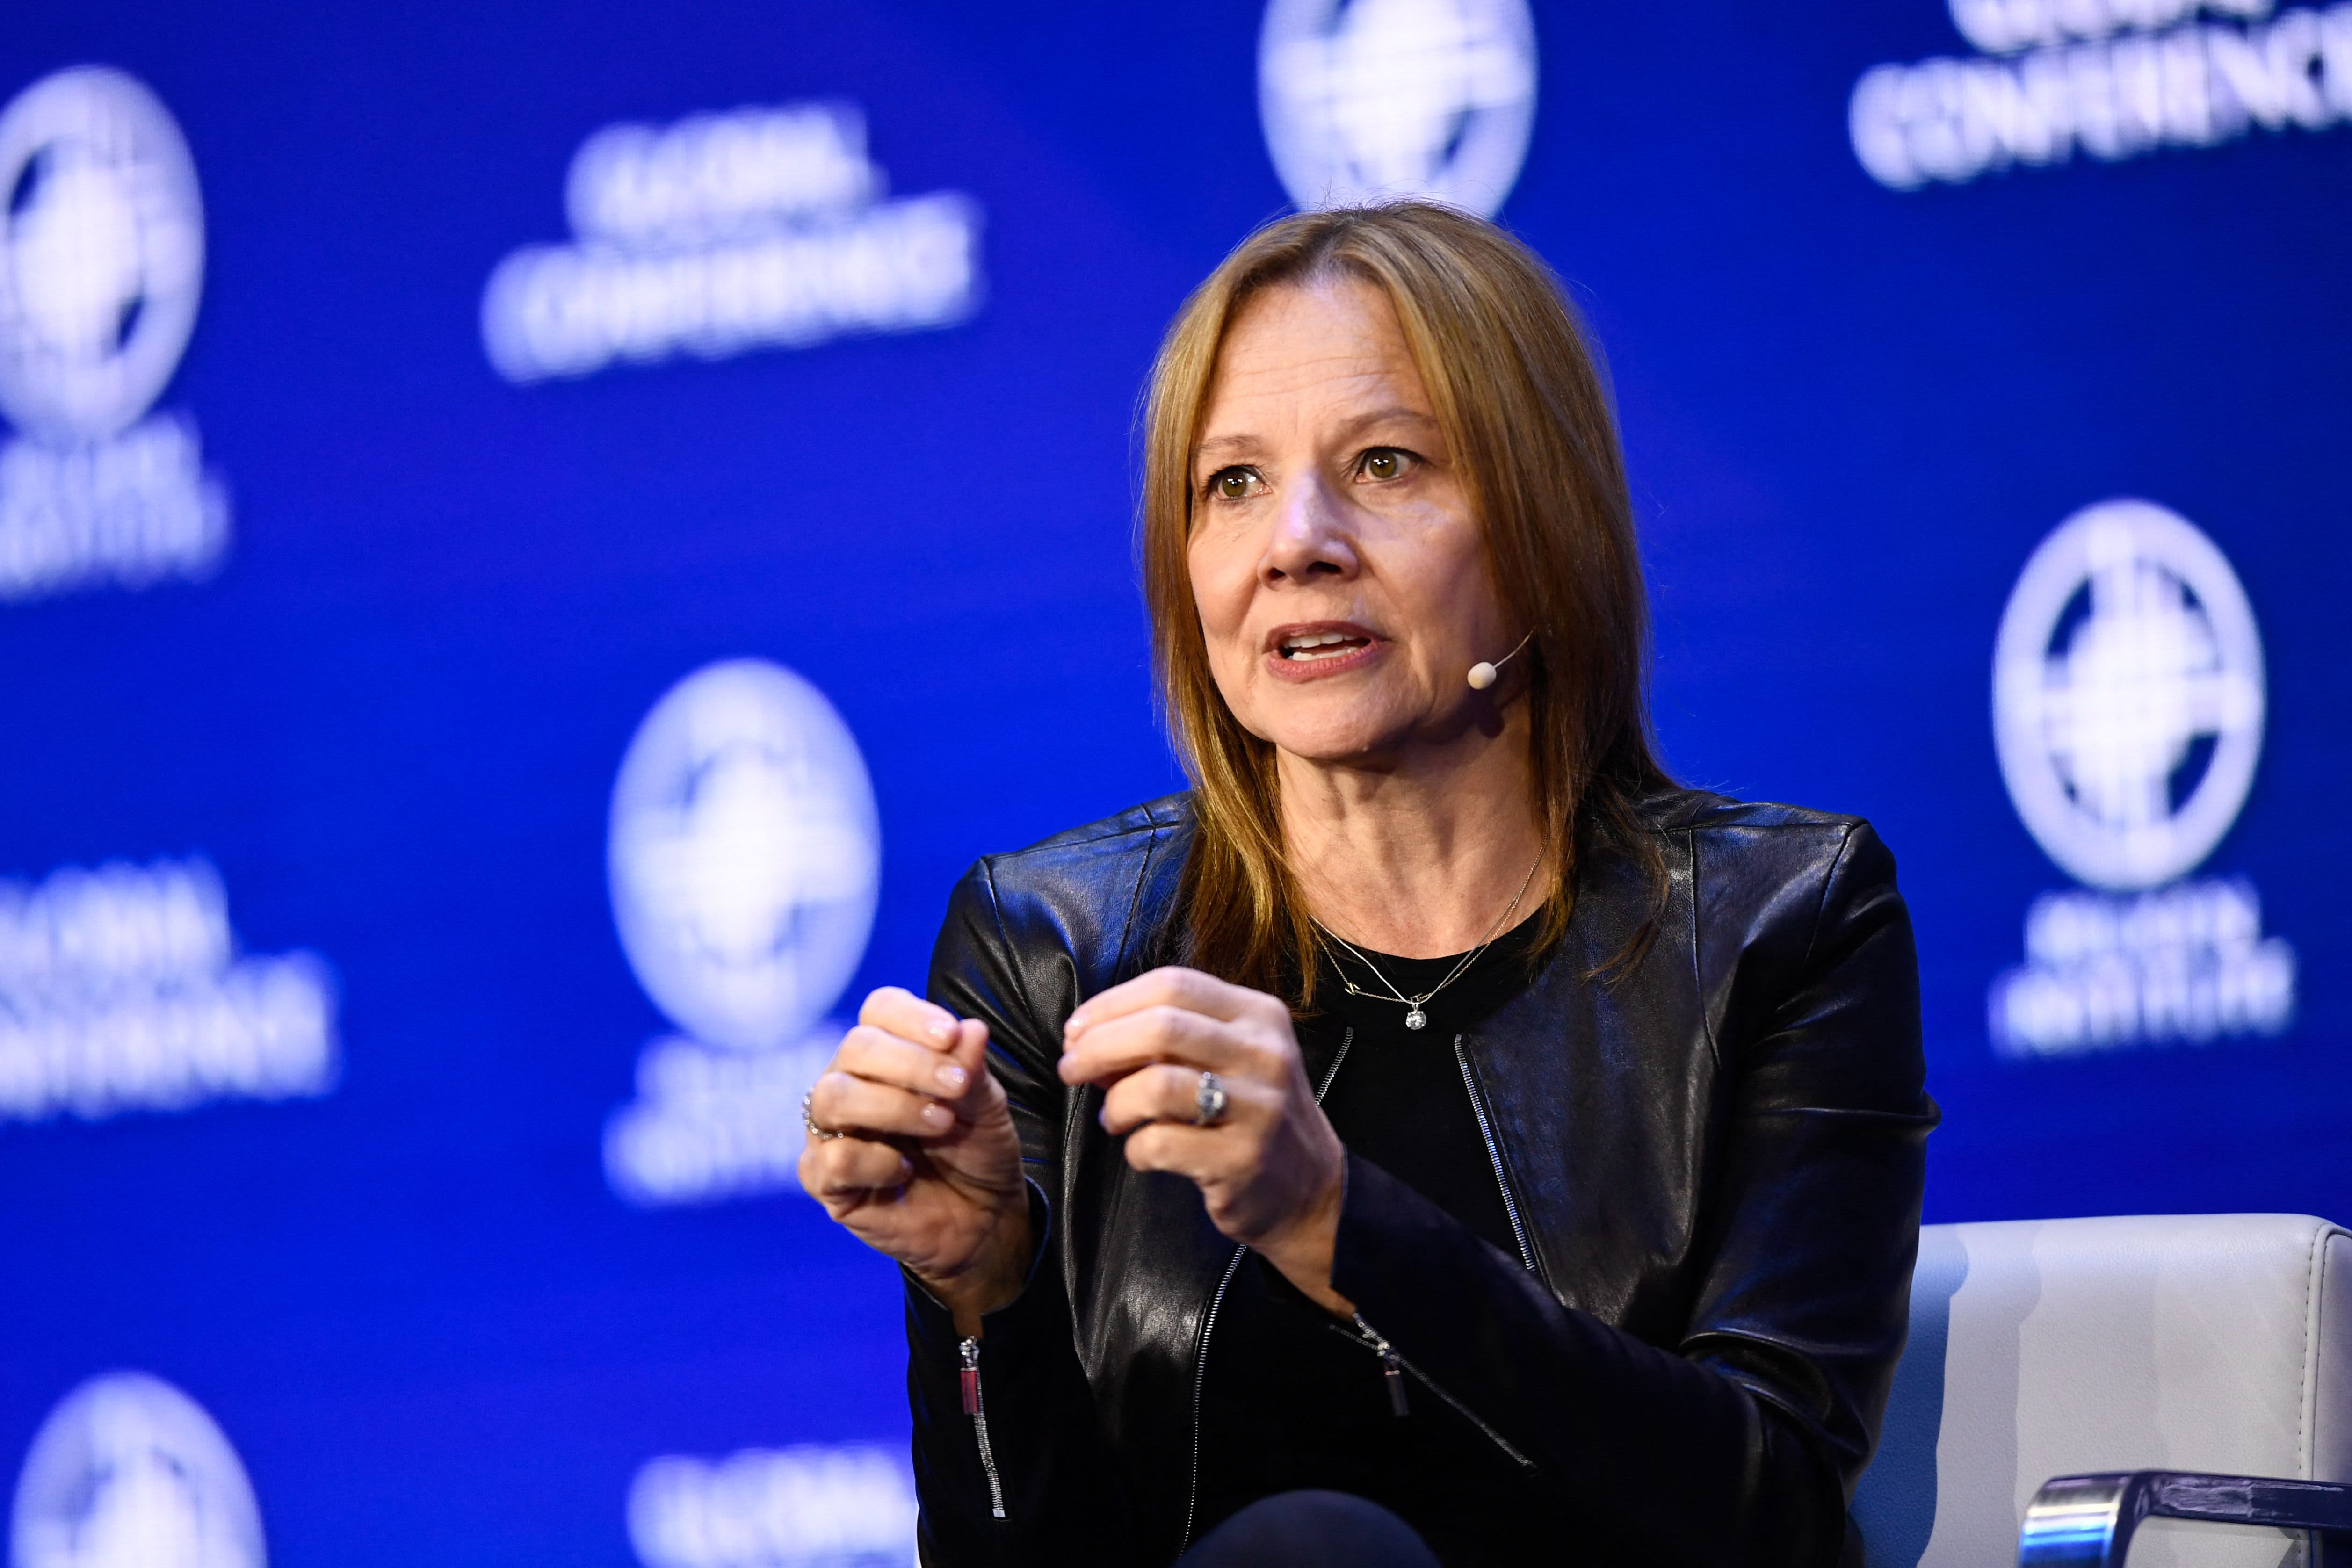 General Motors Announces InvestorFocused Initiatives to Regain Wall